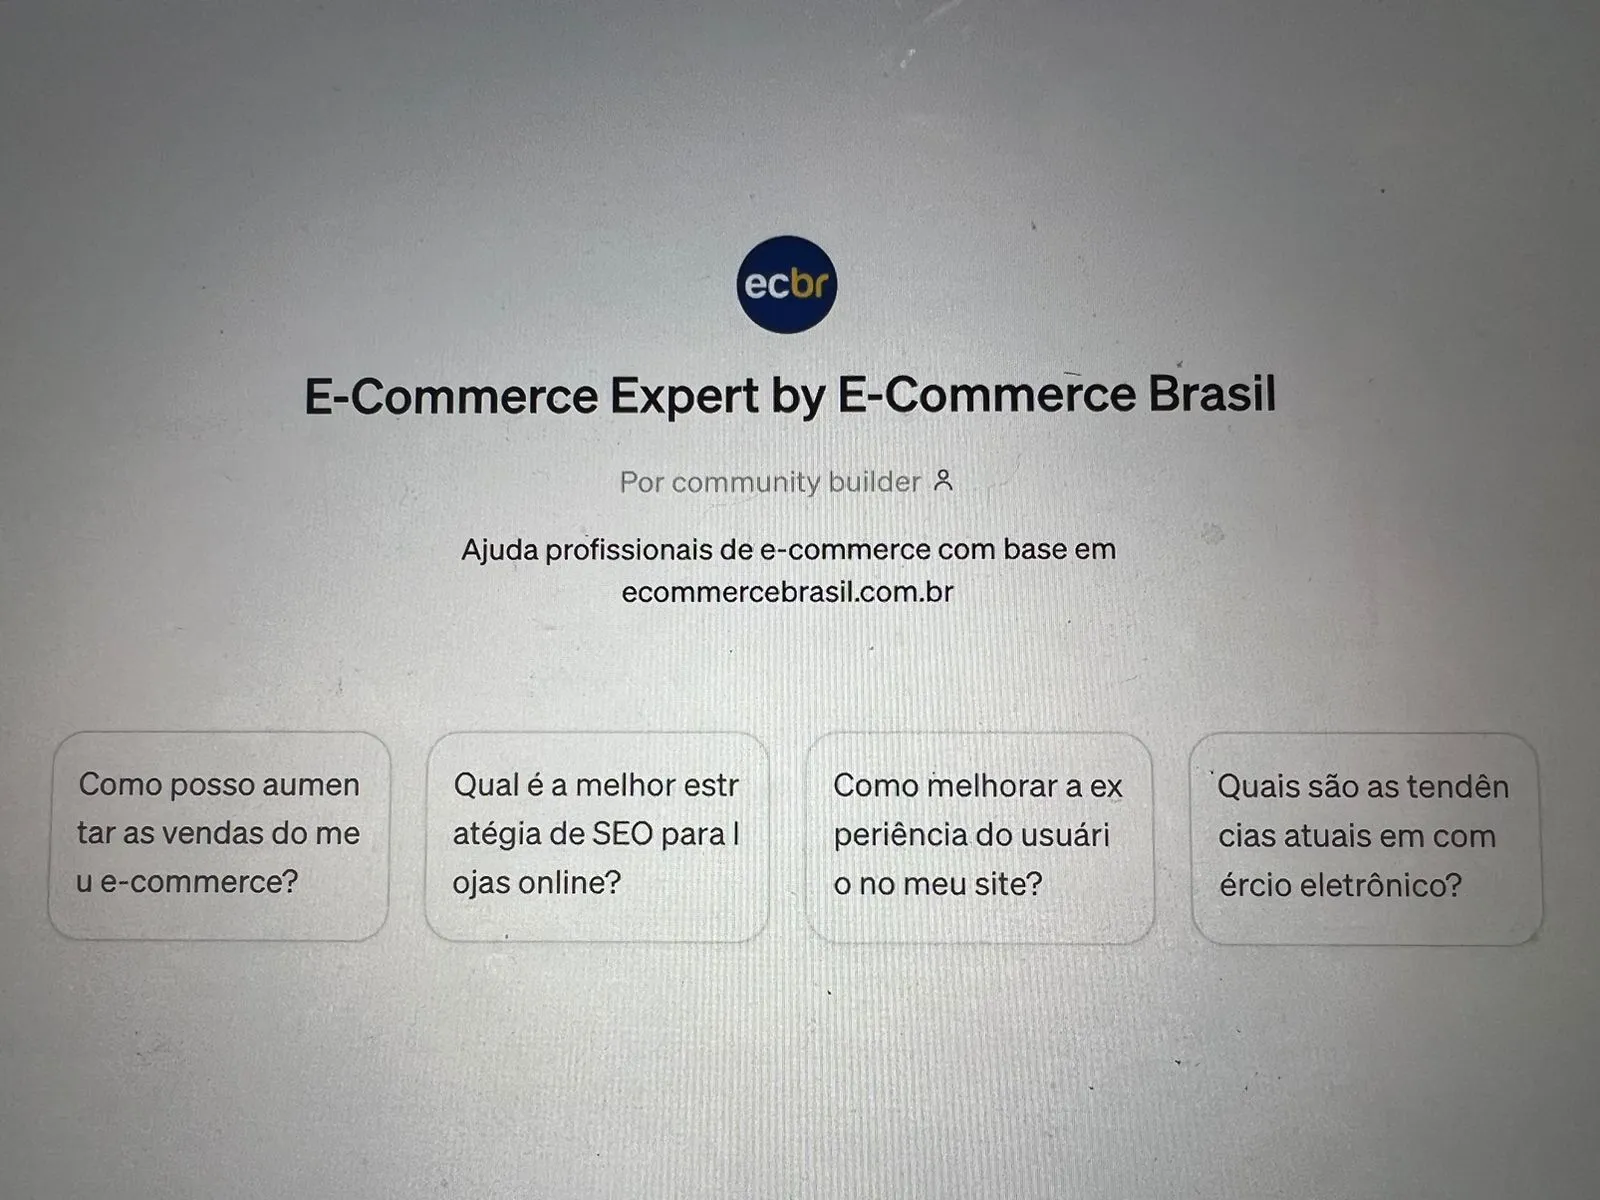 E-Commerce Brasil lança assistente "E-Commerce Expert", no ChatGPT, para ajudar profissionais de e-commerce